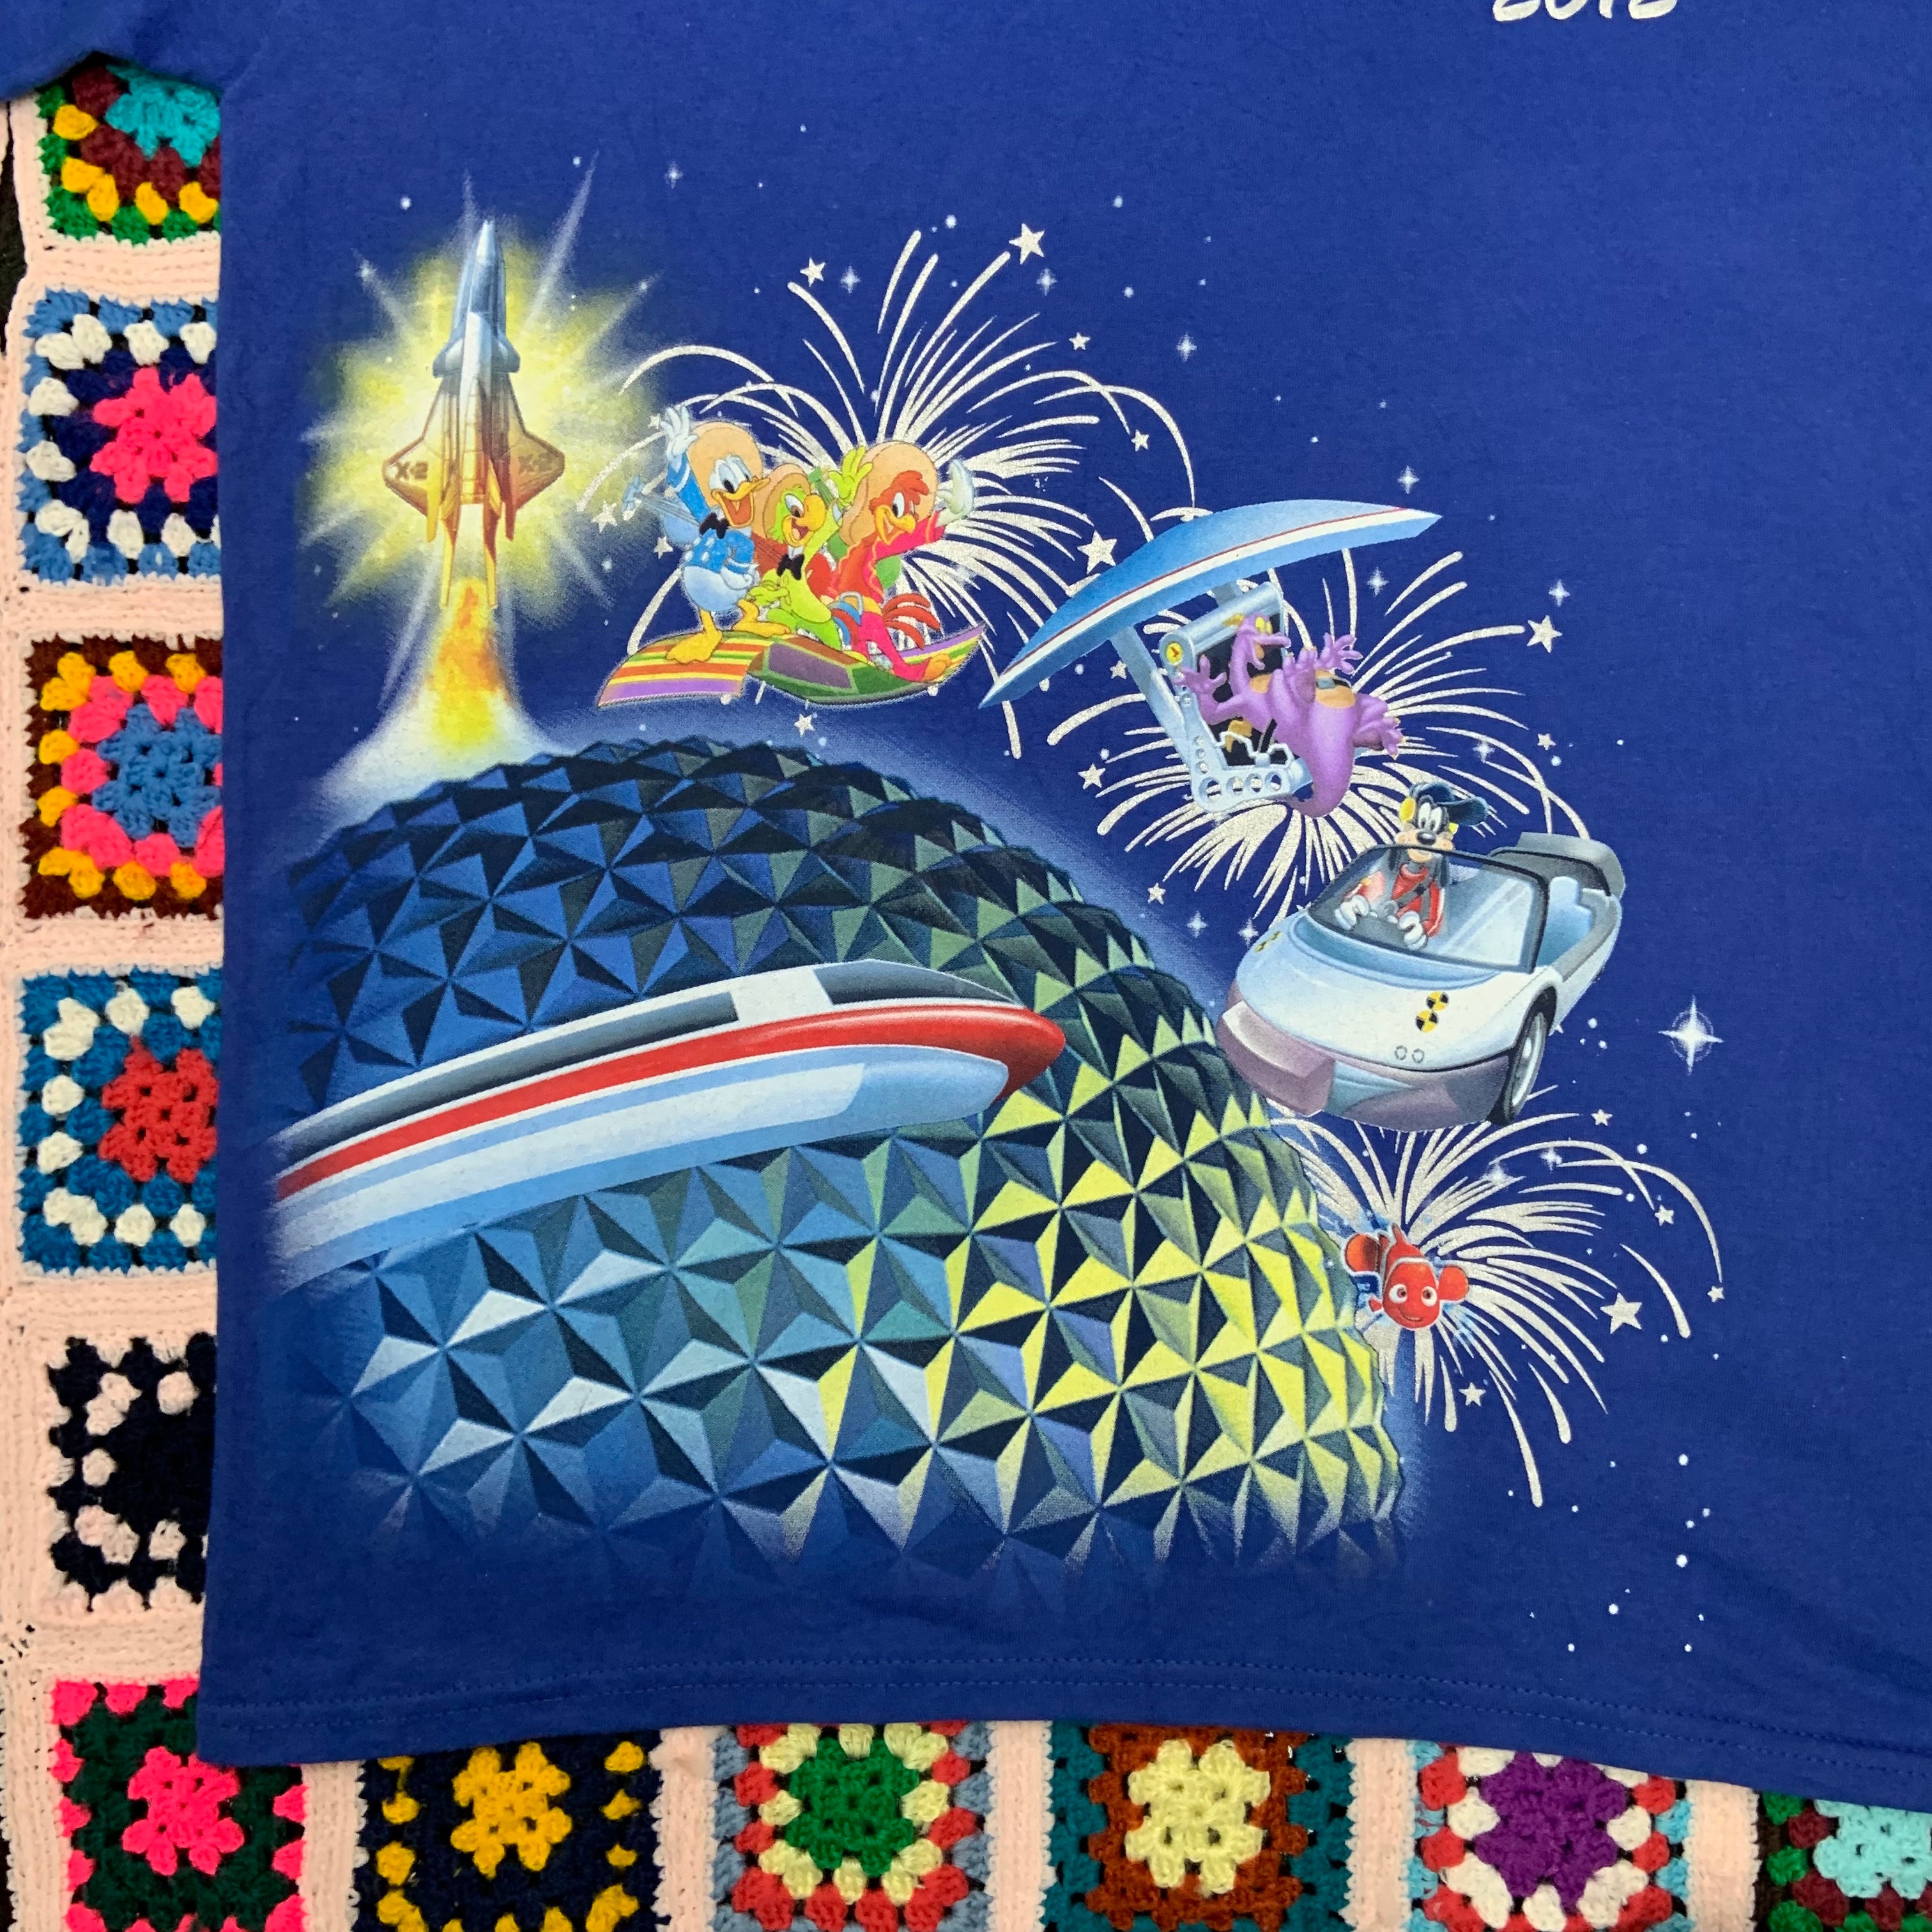 T-Shirt Disney Epcot 2012